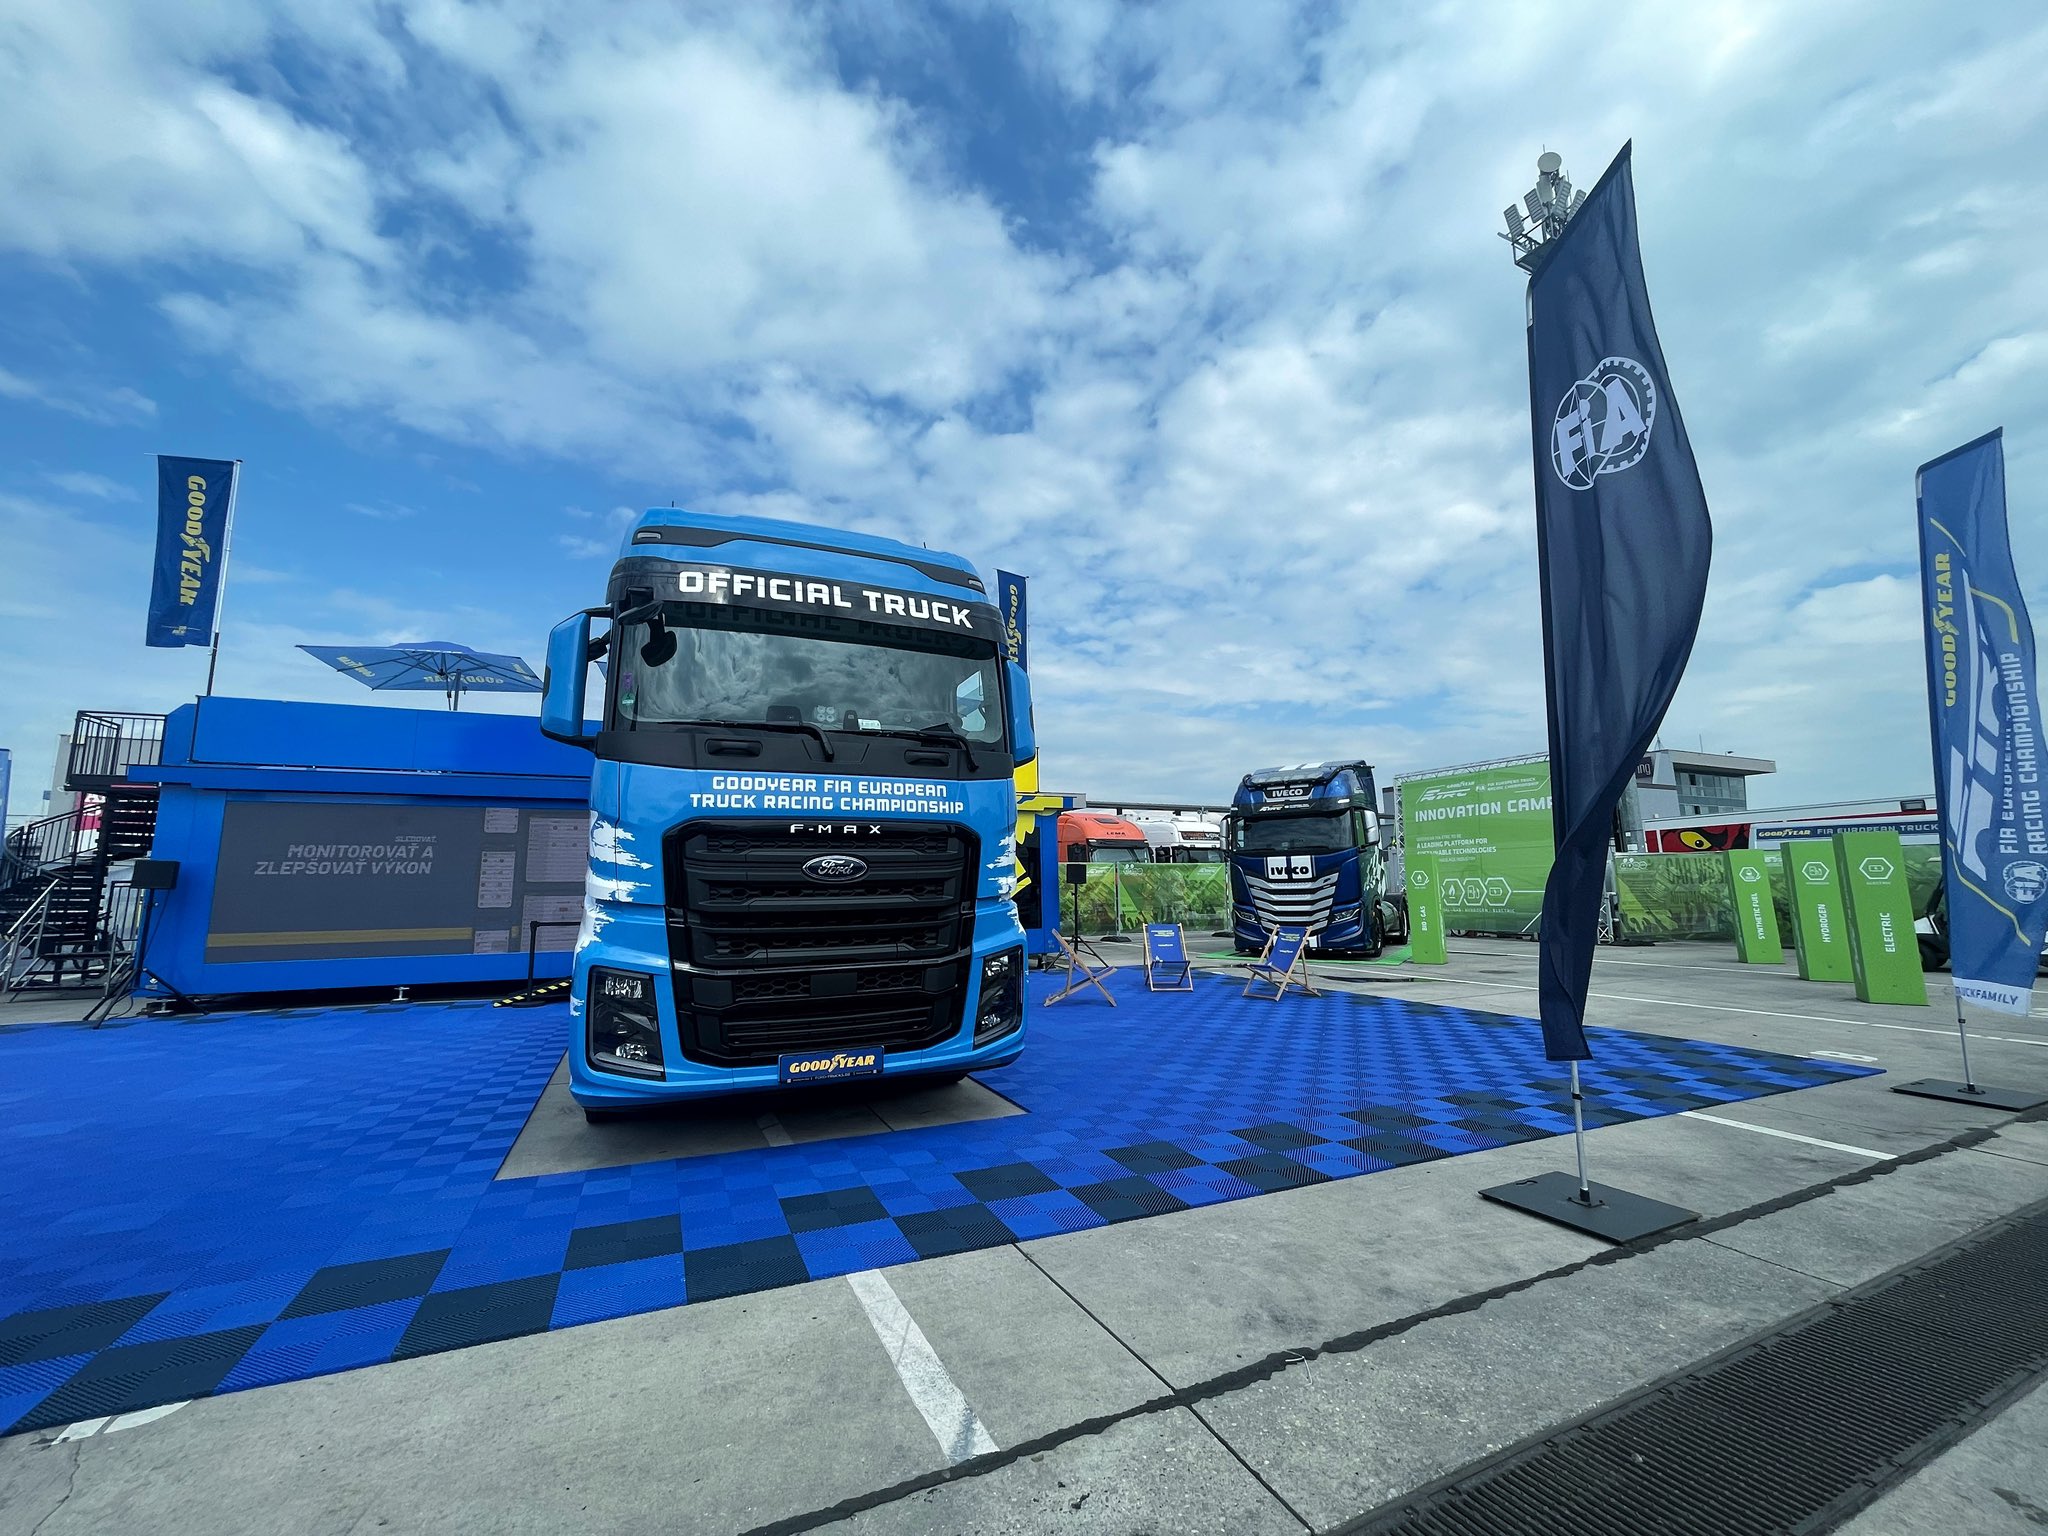 Goodyear FIA European Truck Racing Championship